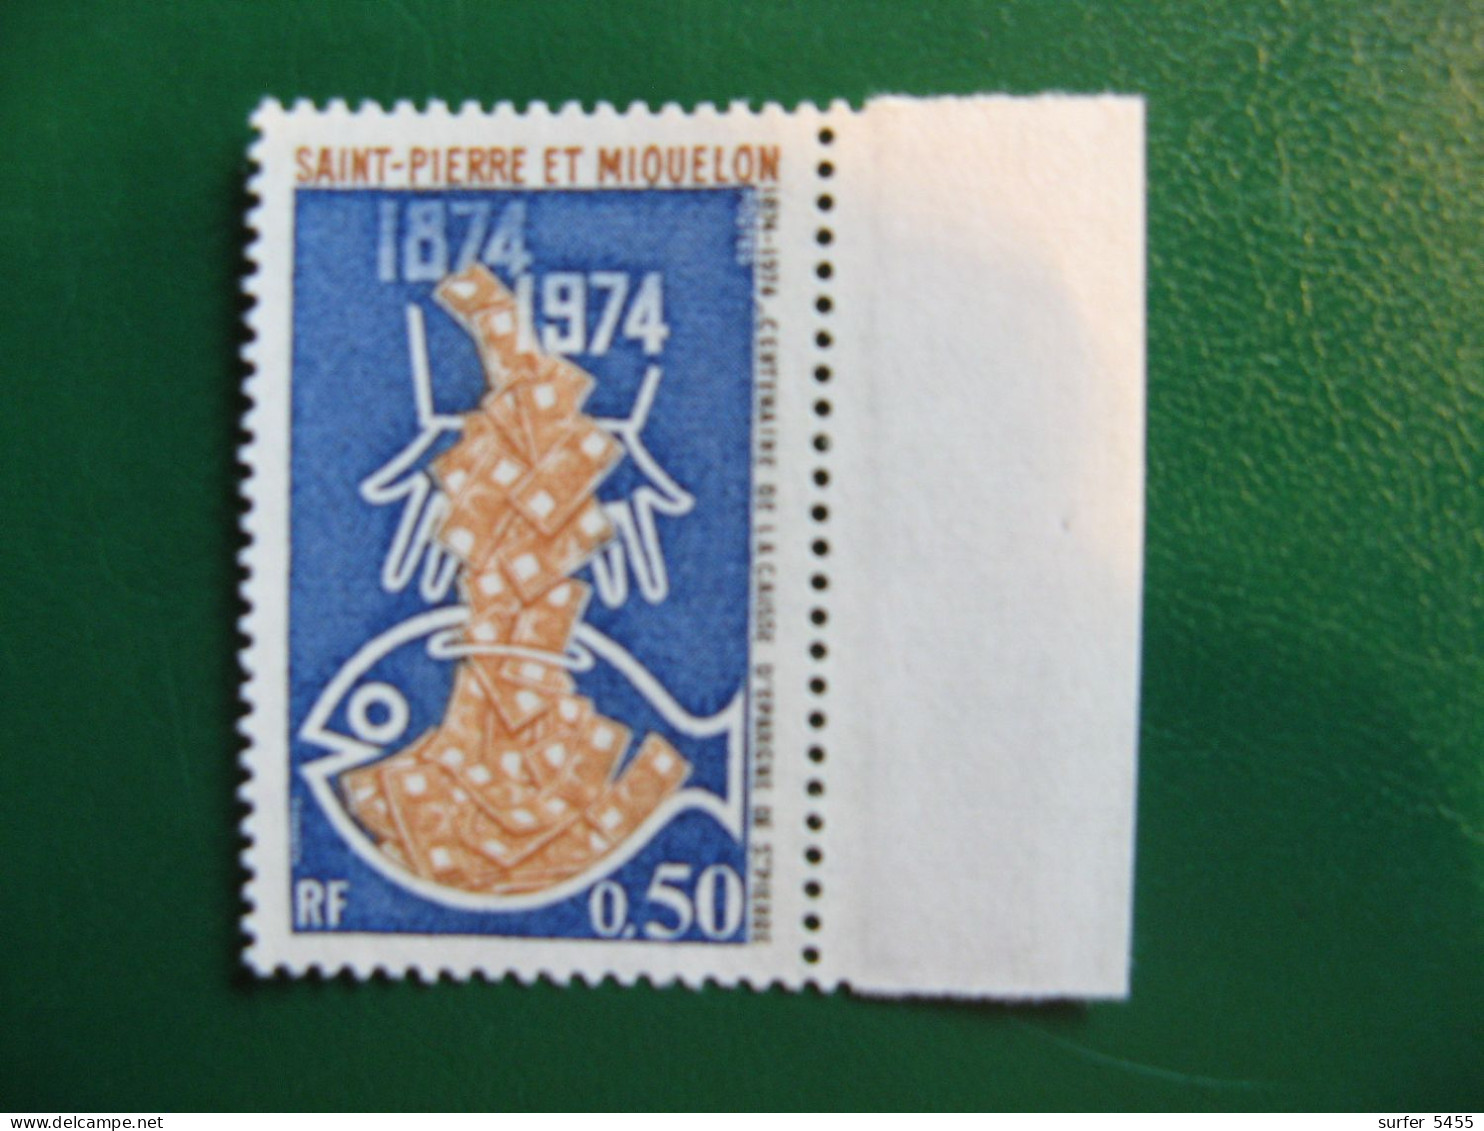 SAINT PIERRE ET MIQUELON YVERT POSTE ORDINAIRE N° 437 NEUF** LUXE - MNH -  COTE 8,00 EUROS - Unused Stamps